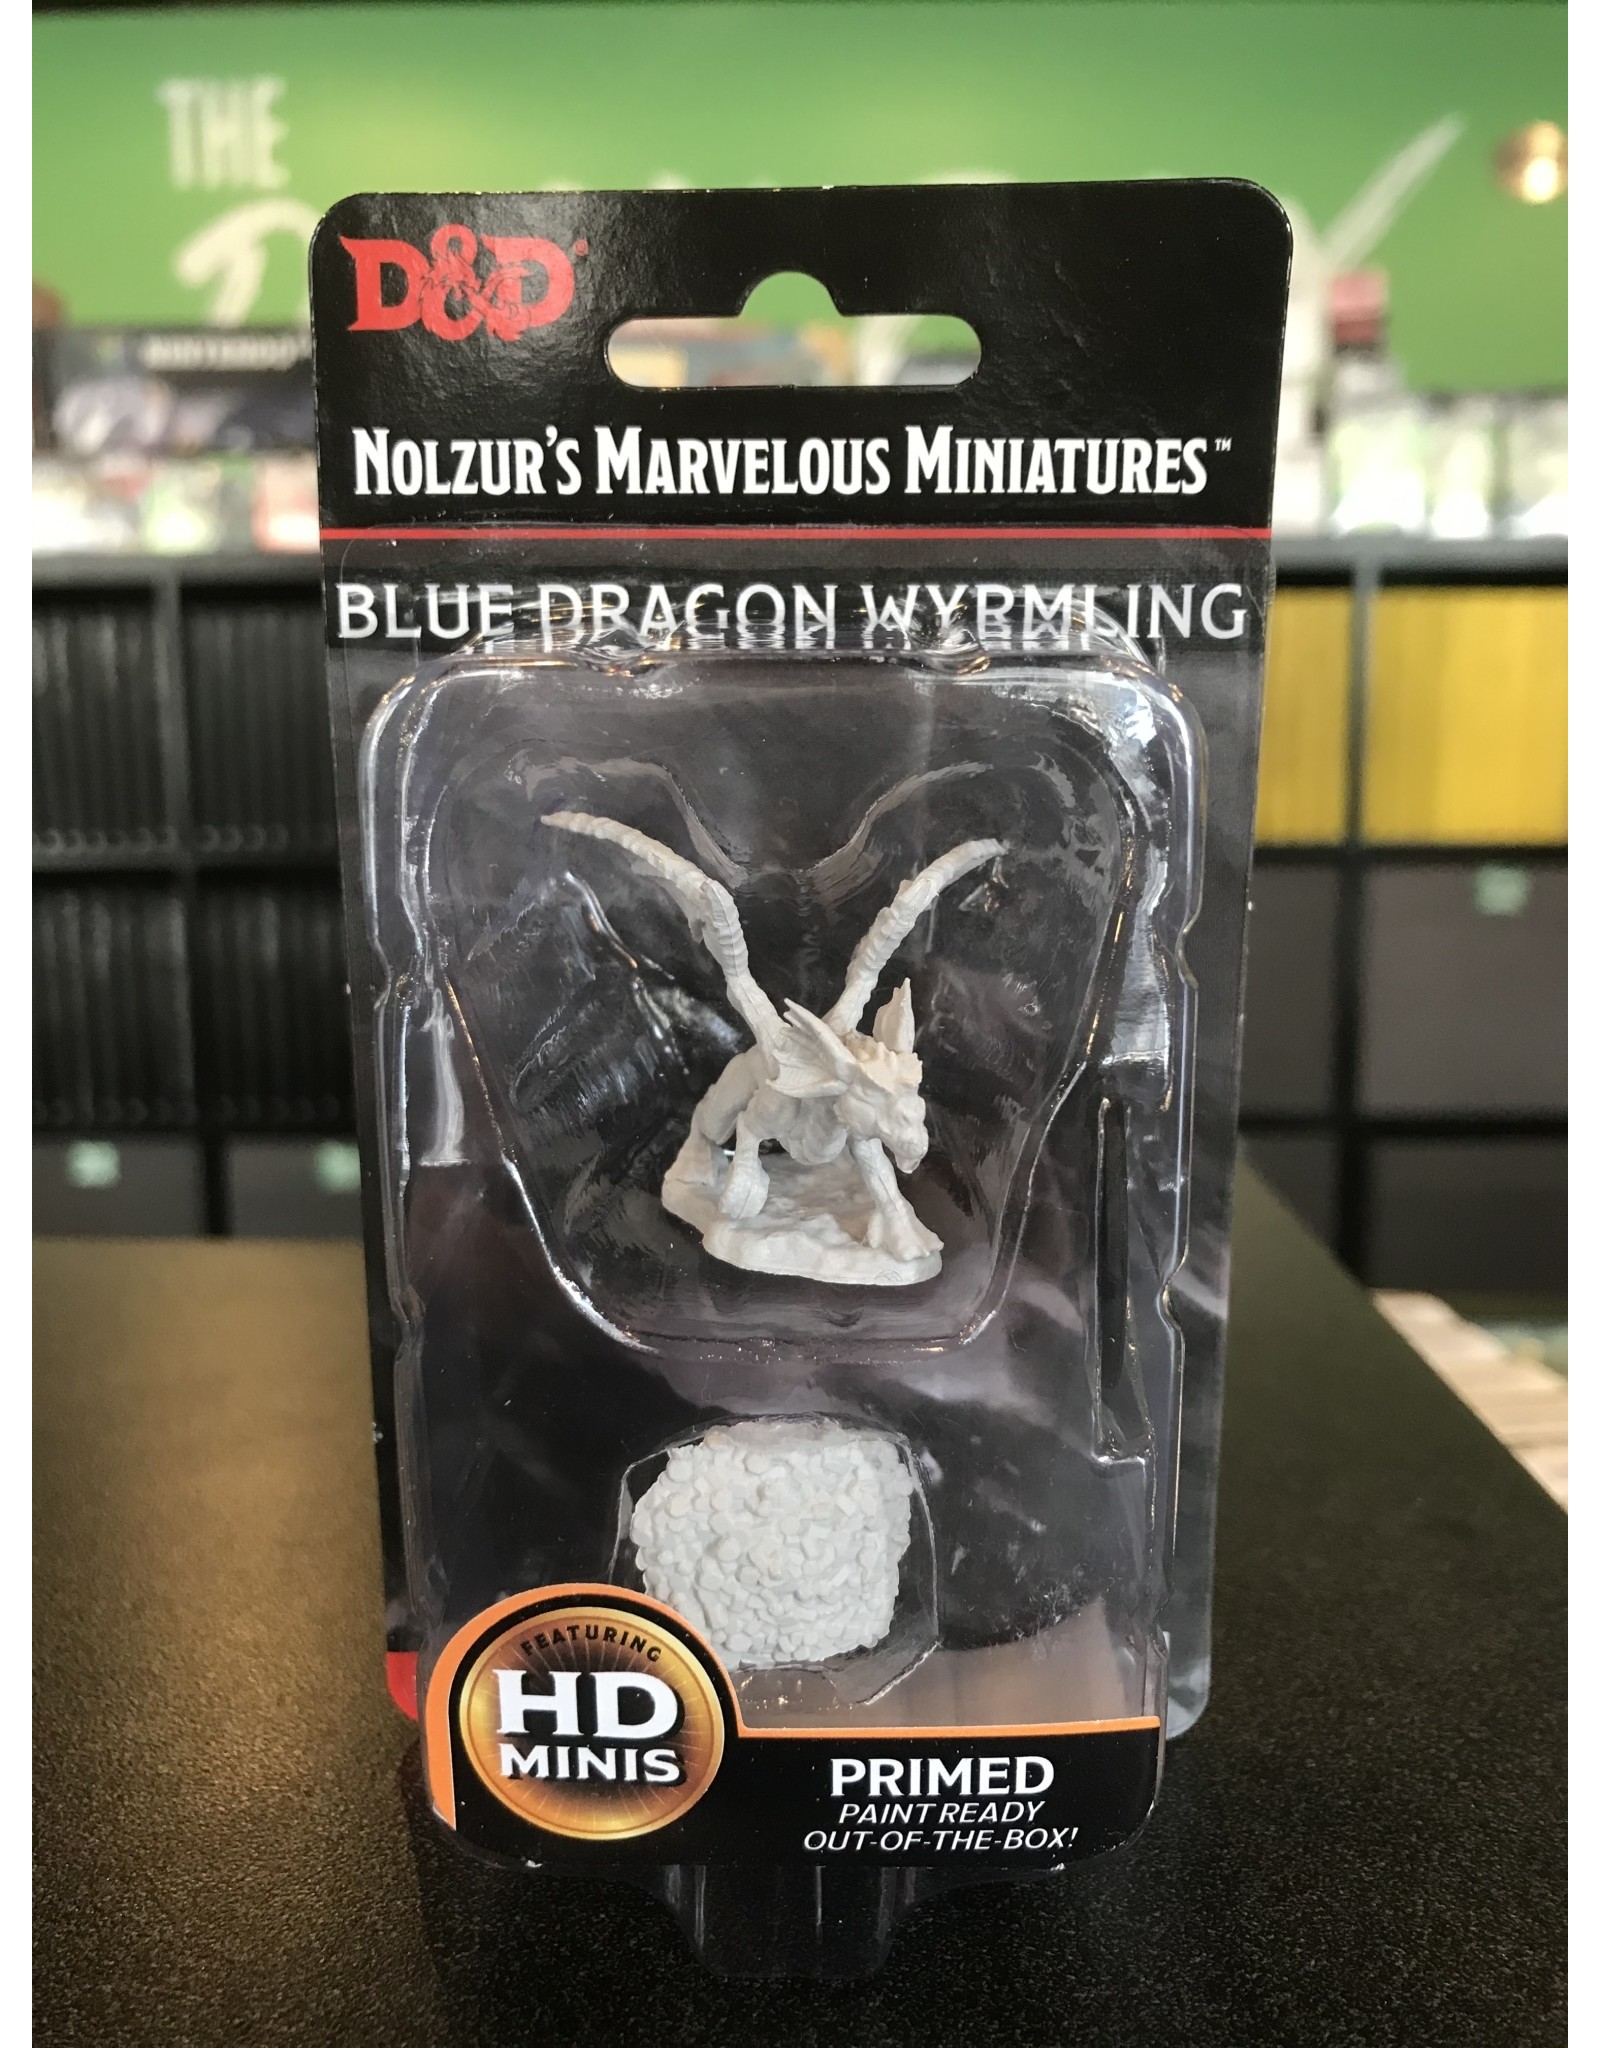 D & D Minis DND UNPAINTED MINIS BLUE DRAGON WYRMLING